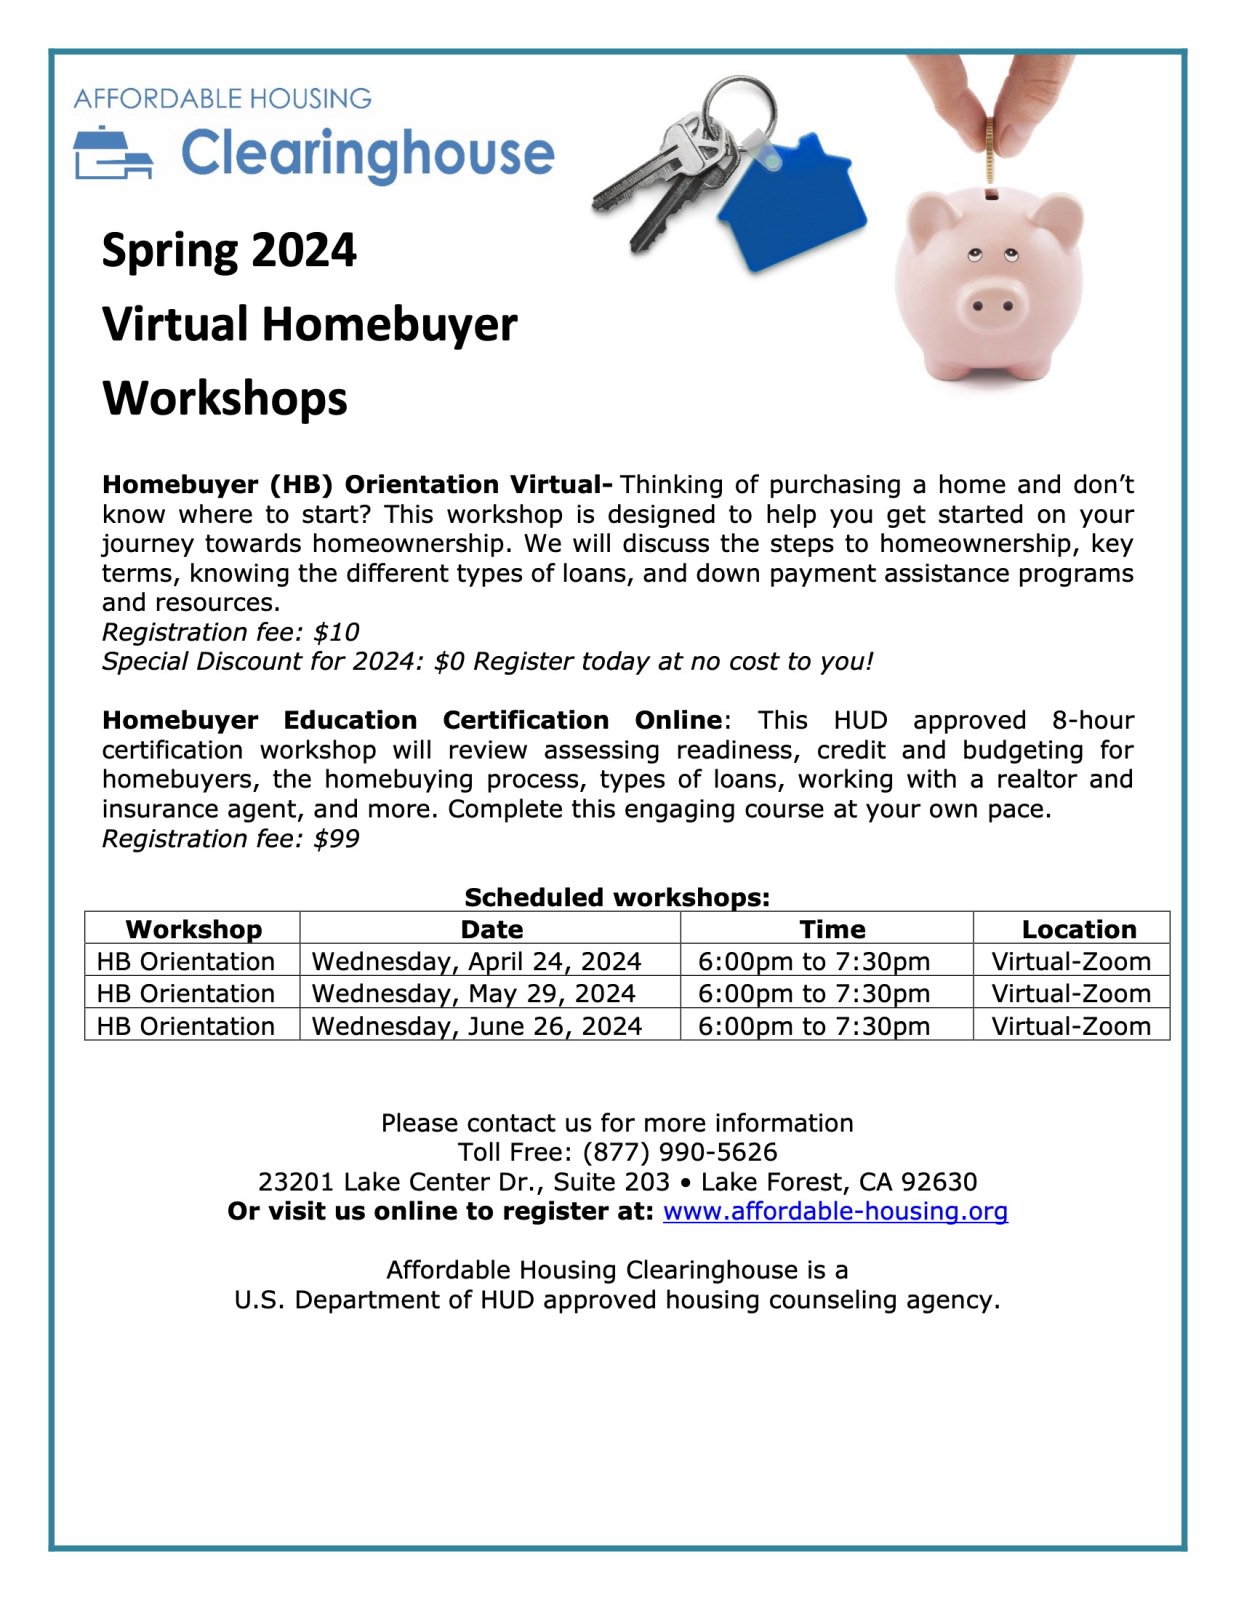 Spring 2024 Virtual Homebuyer Workshops